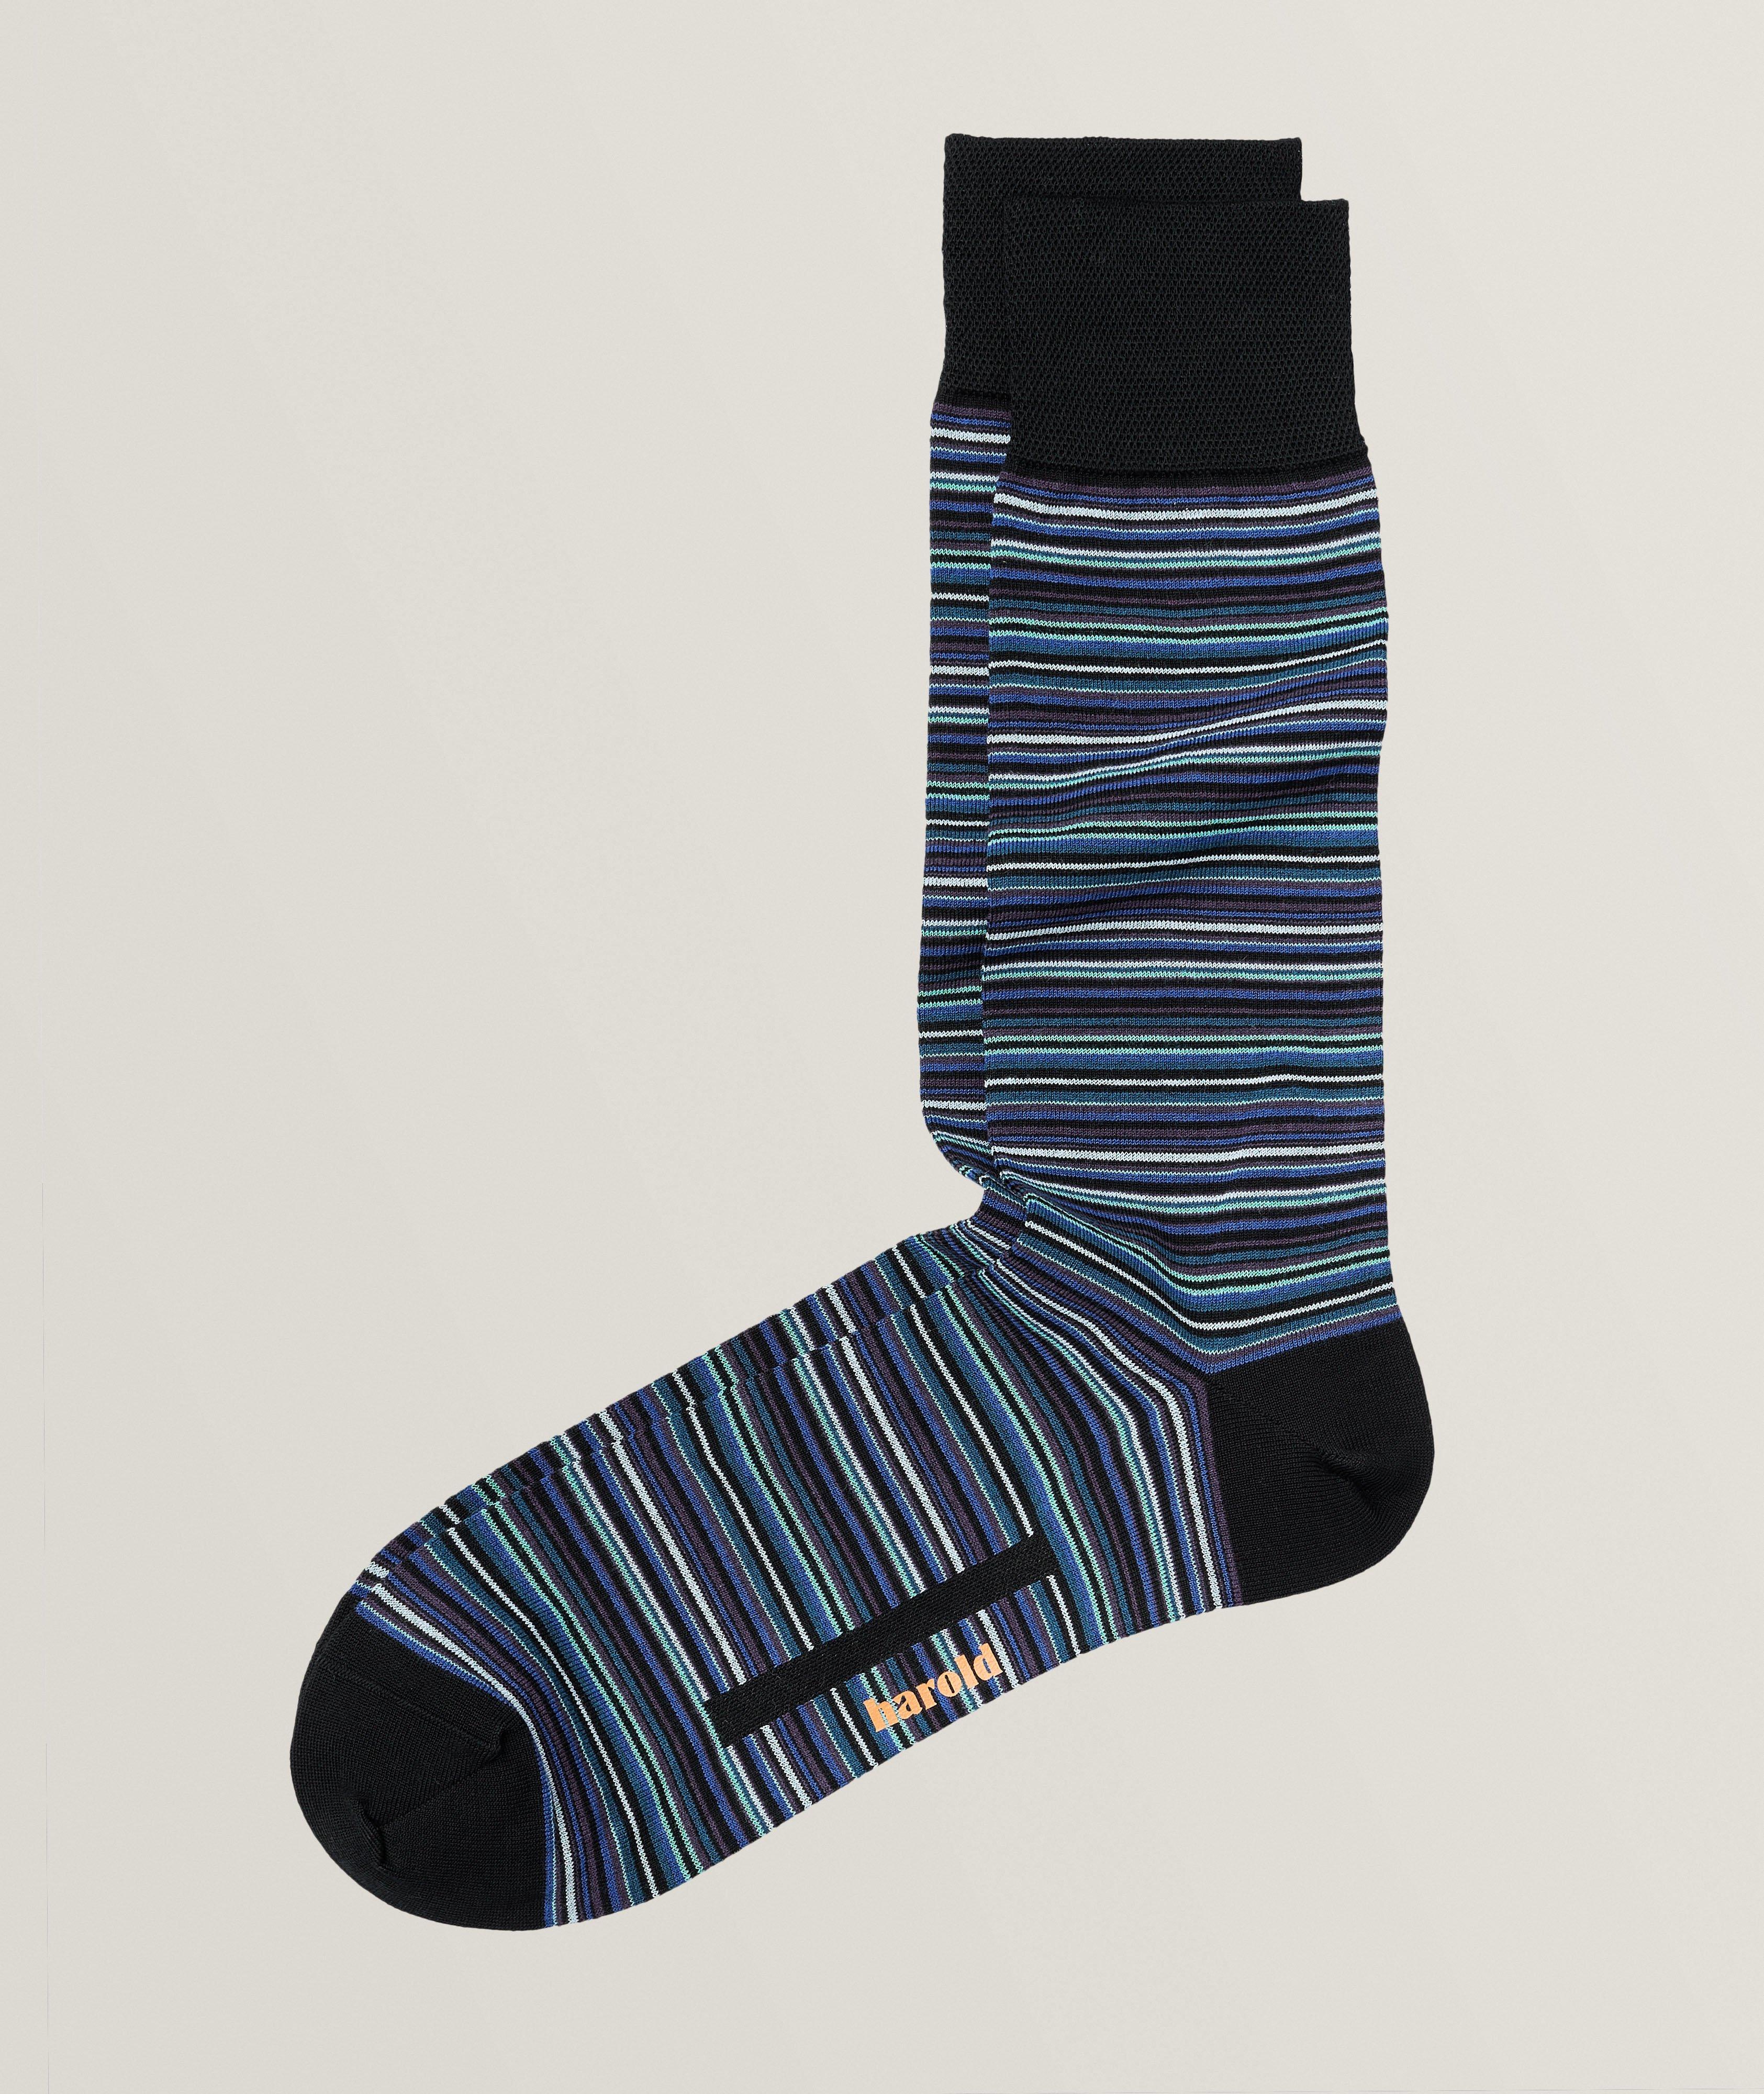 Multistriped Mercerized Stretch-Cotton Socks image 0